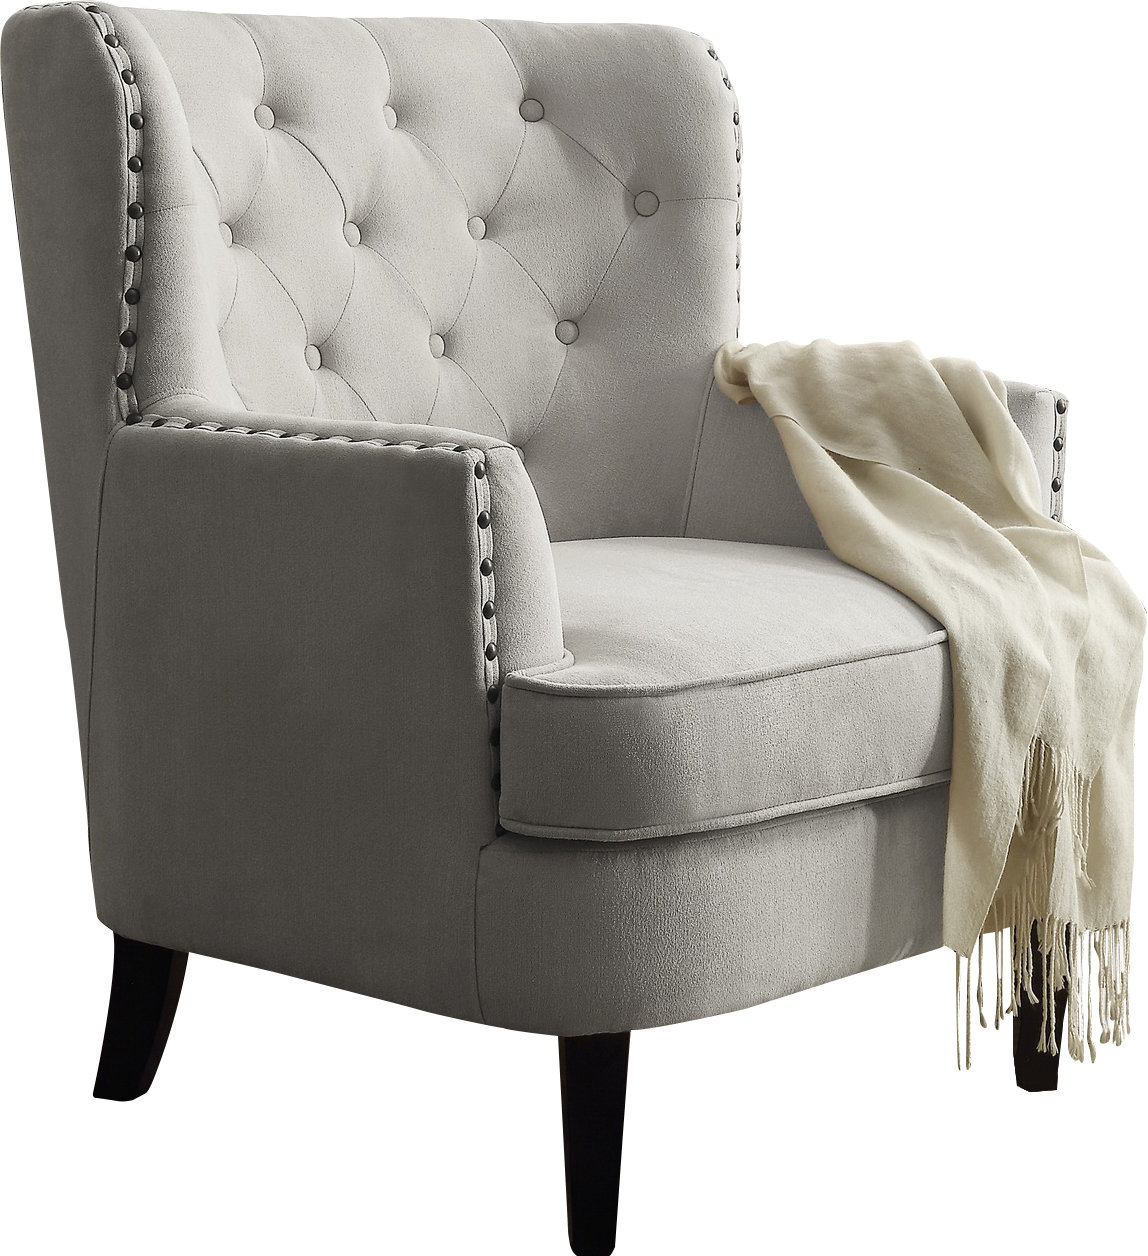 Wingback chair laurel foundry modern farmhouse ivo wingback chair u0026 reviews | wayfair DAWKQVY